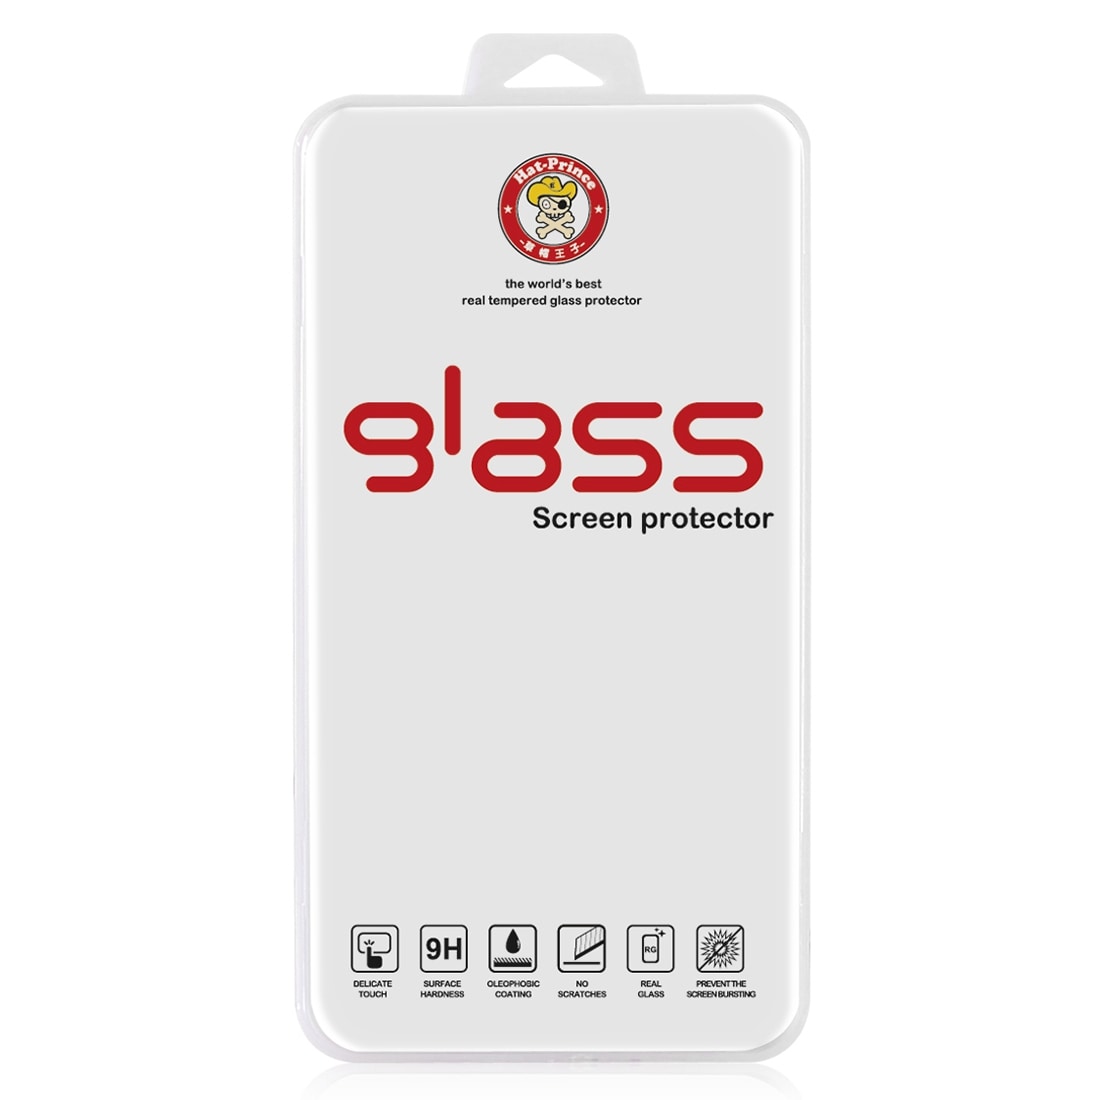 Herdet Glassbeskyttelse iPhone 8 / 7 - Bøyd Gull